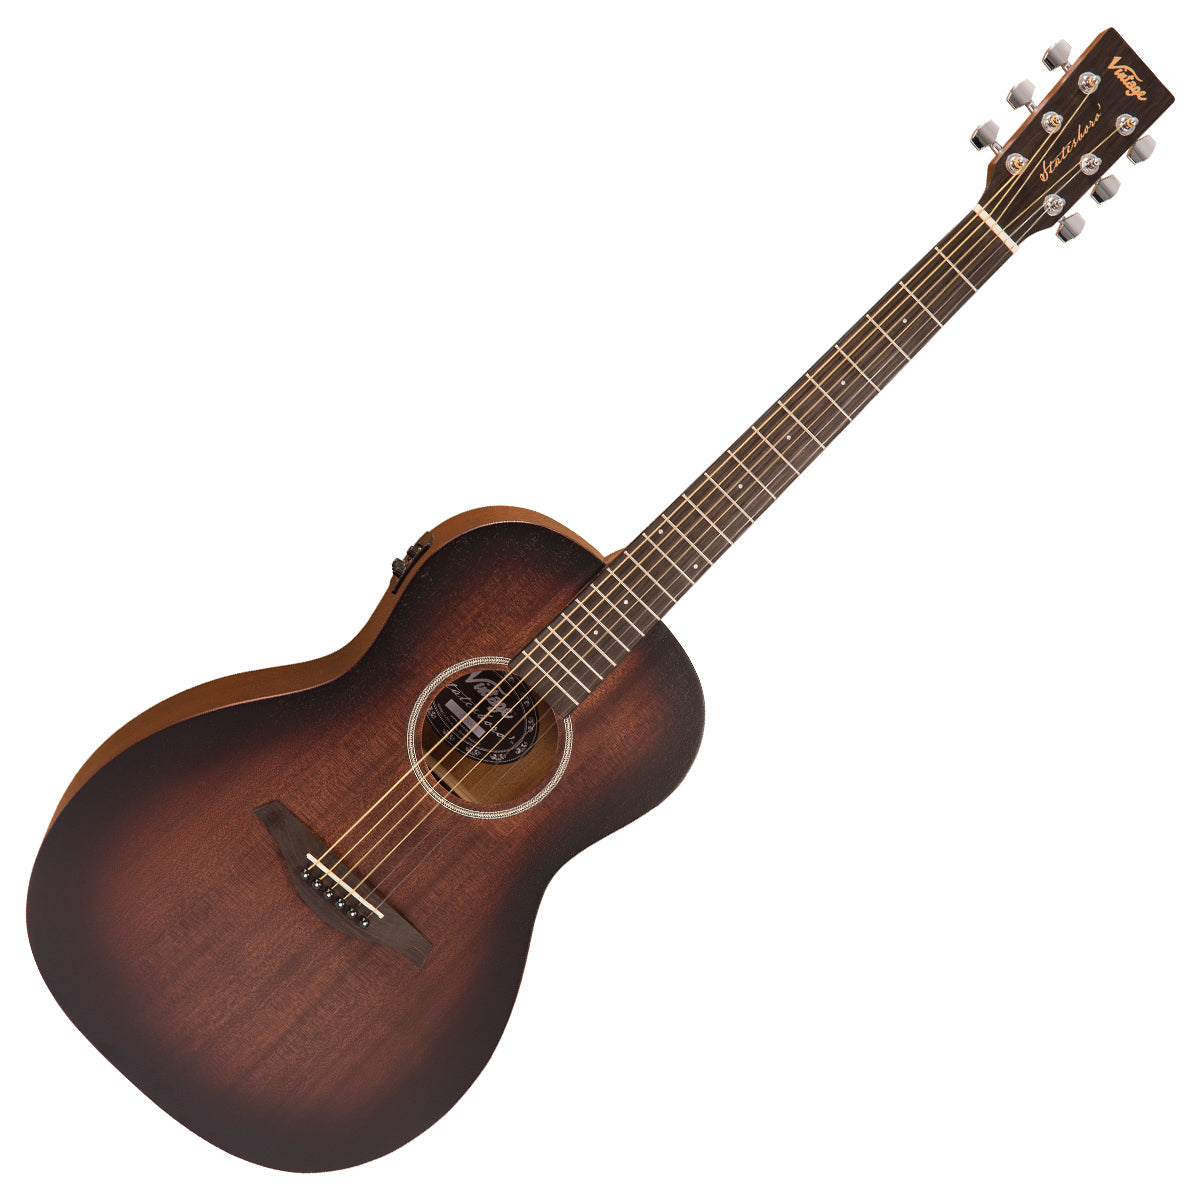 Vintage Statesboro' 'Parlour' Electro-Acoustic Guitar ~ Whisky Sour, Electro Acoustic Guitars for sale at Richards Guitars.